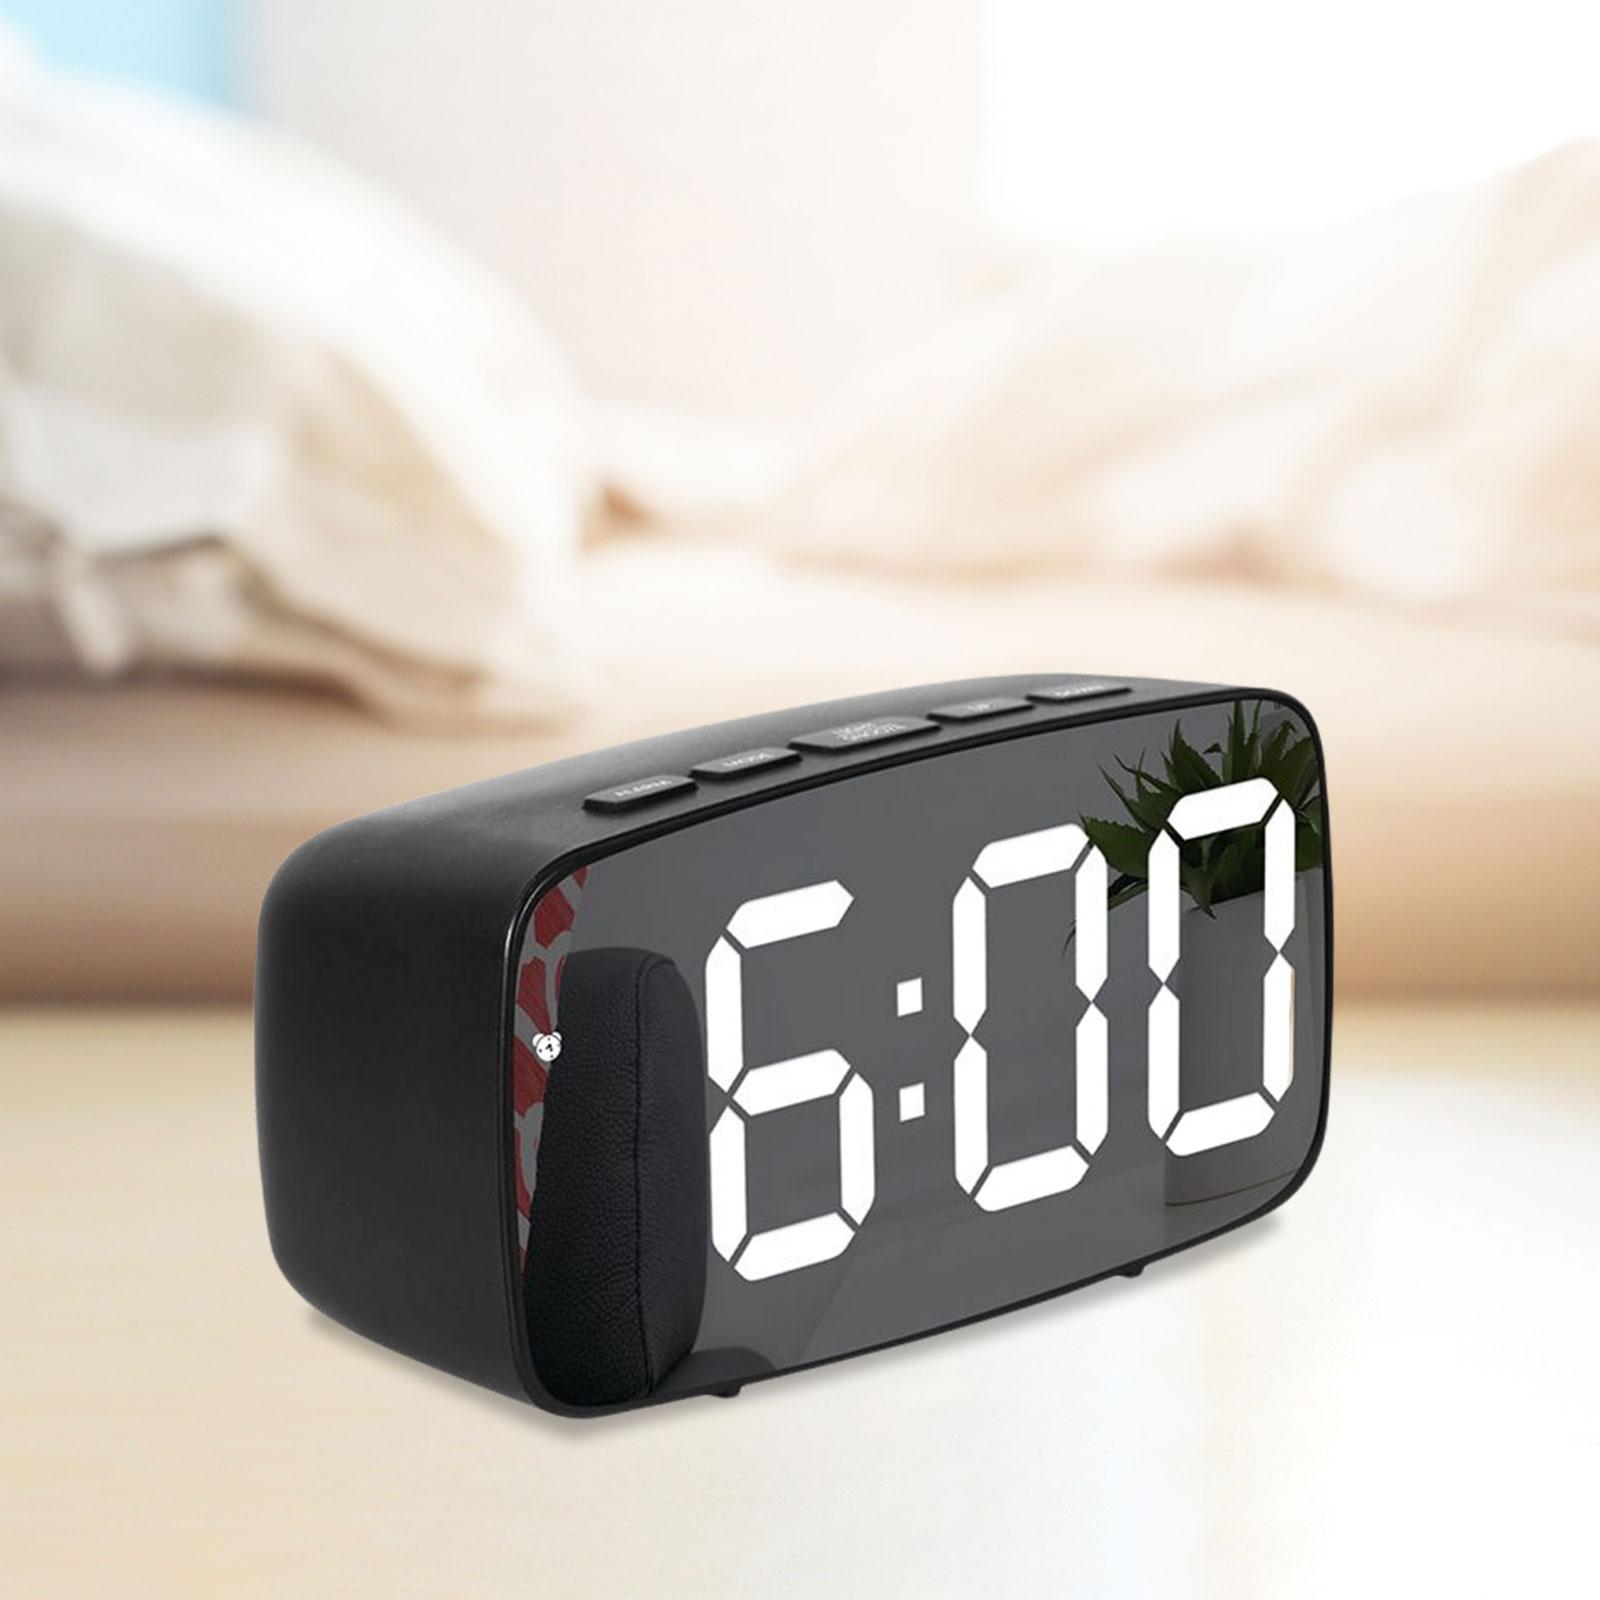 Digital LED Alarm Clock Bedroom Mirror Surface Snooze Bedside Black Mirror